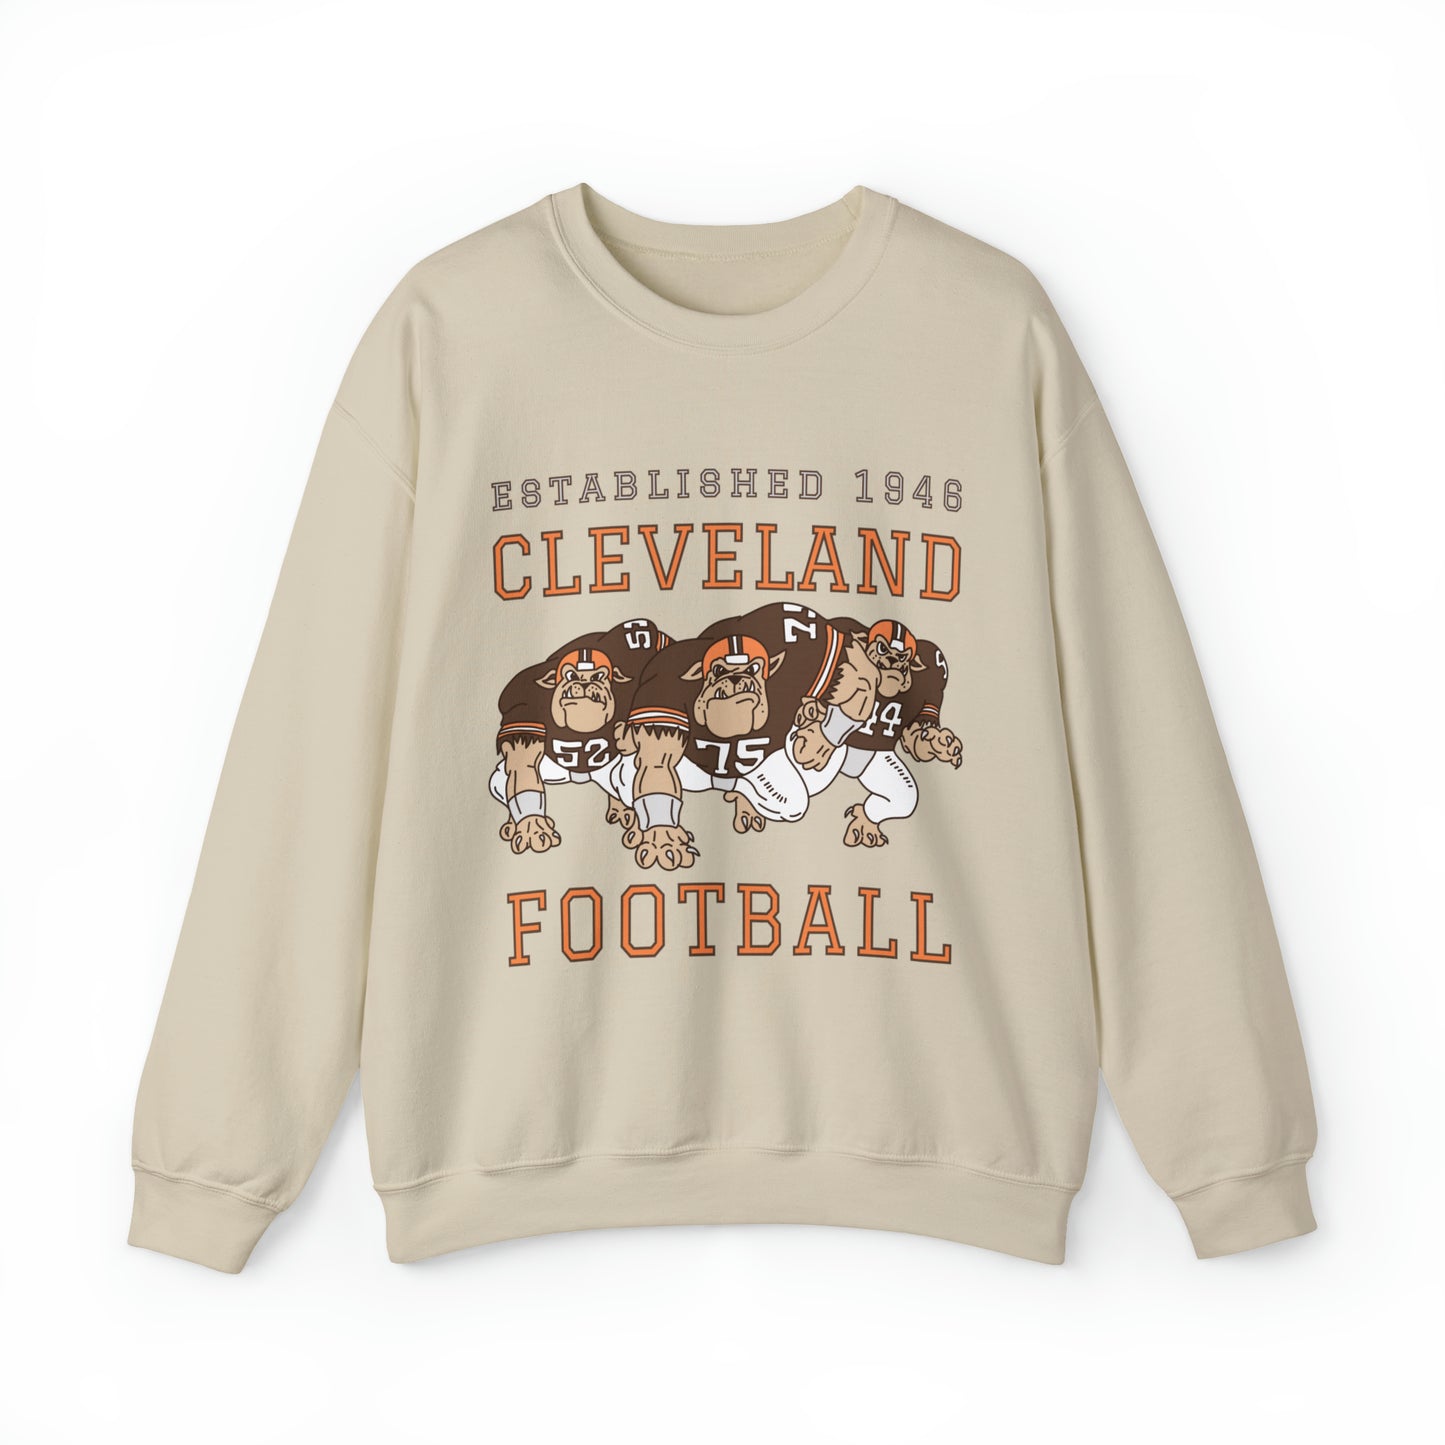 Vintage Cleveland Browns Crewneck - Browns Dawg Pound NFL Football Apparel - Men's & Women's Sweatshirt Beige Sand Tan